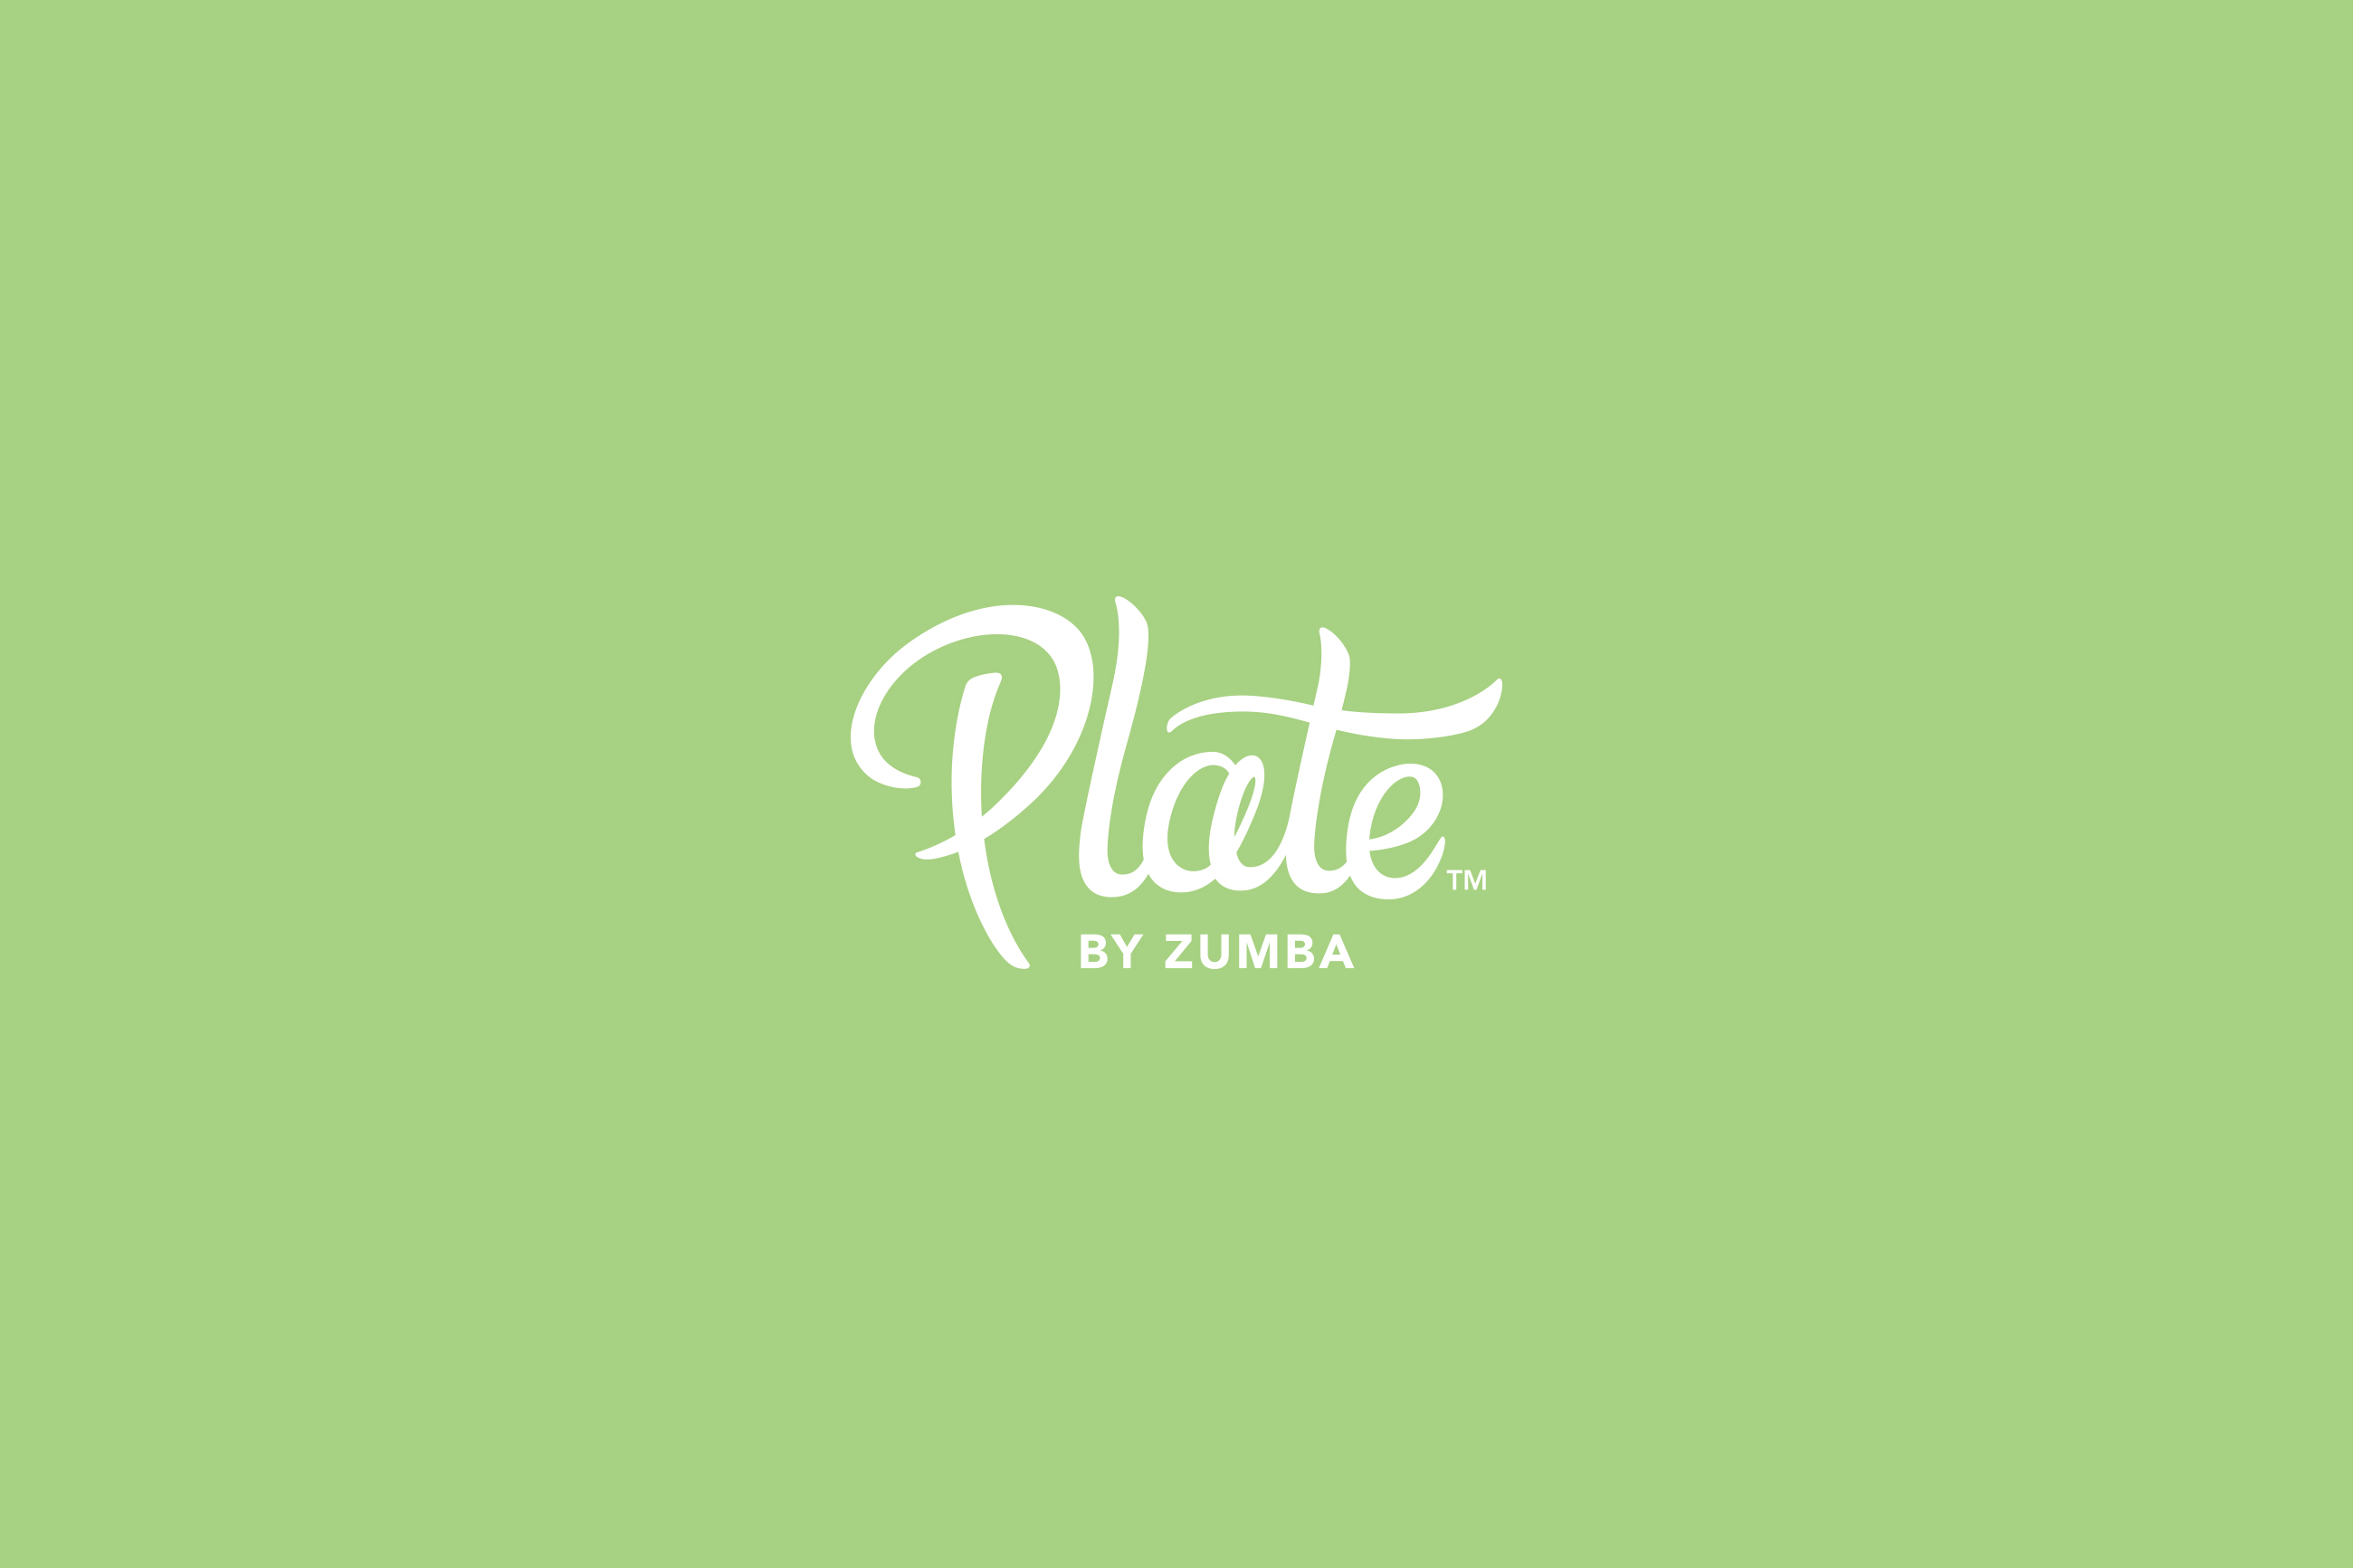 Plate_logo1_Studio_St_Louis